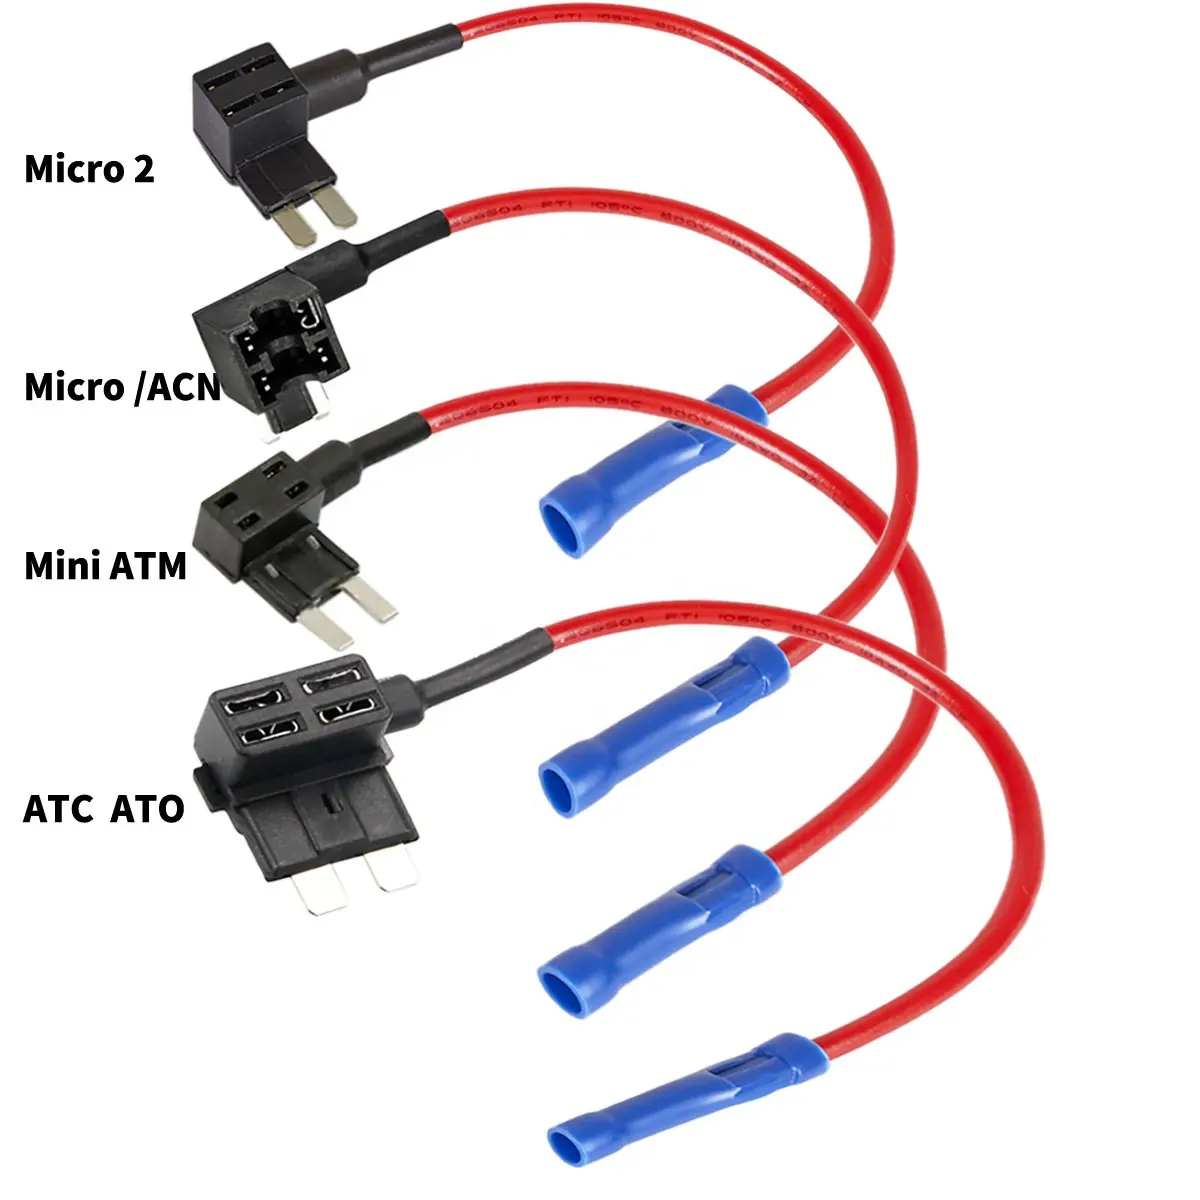 Micro2/ Micro ACN/ Mini ATM /ATC ATO, добавление держателя Предохранителя Цепи